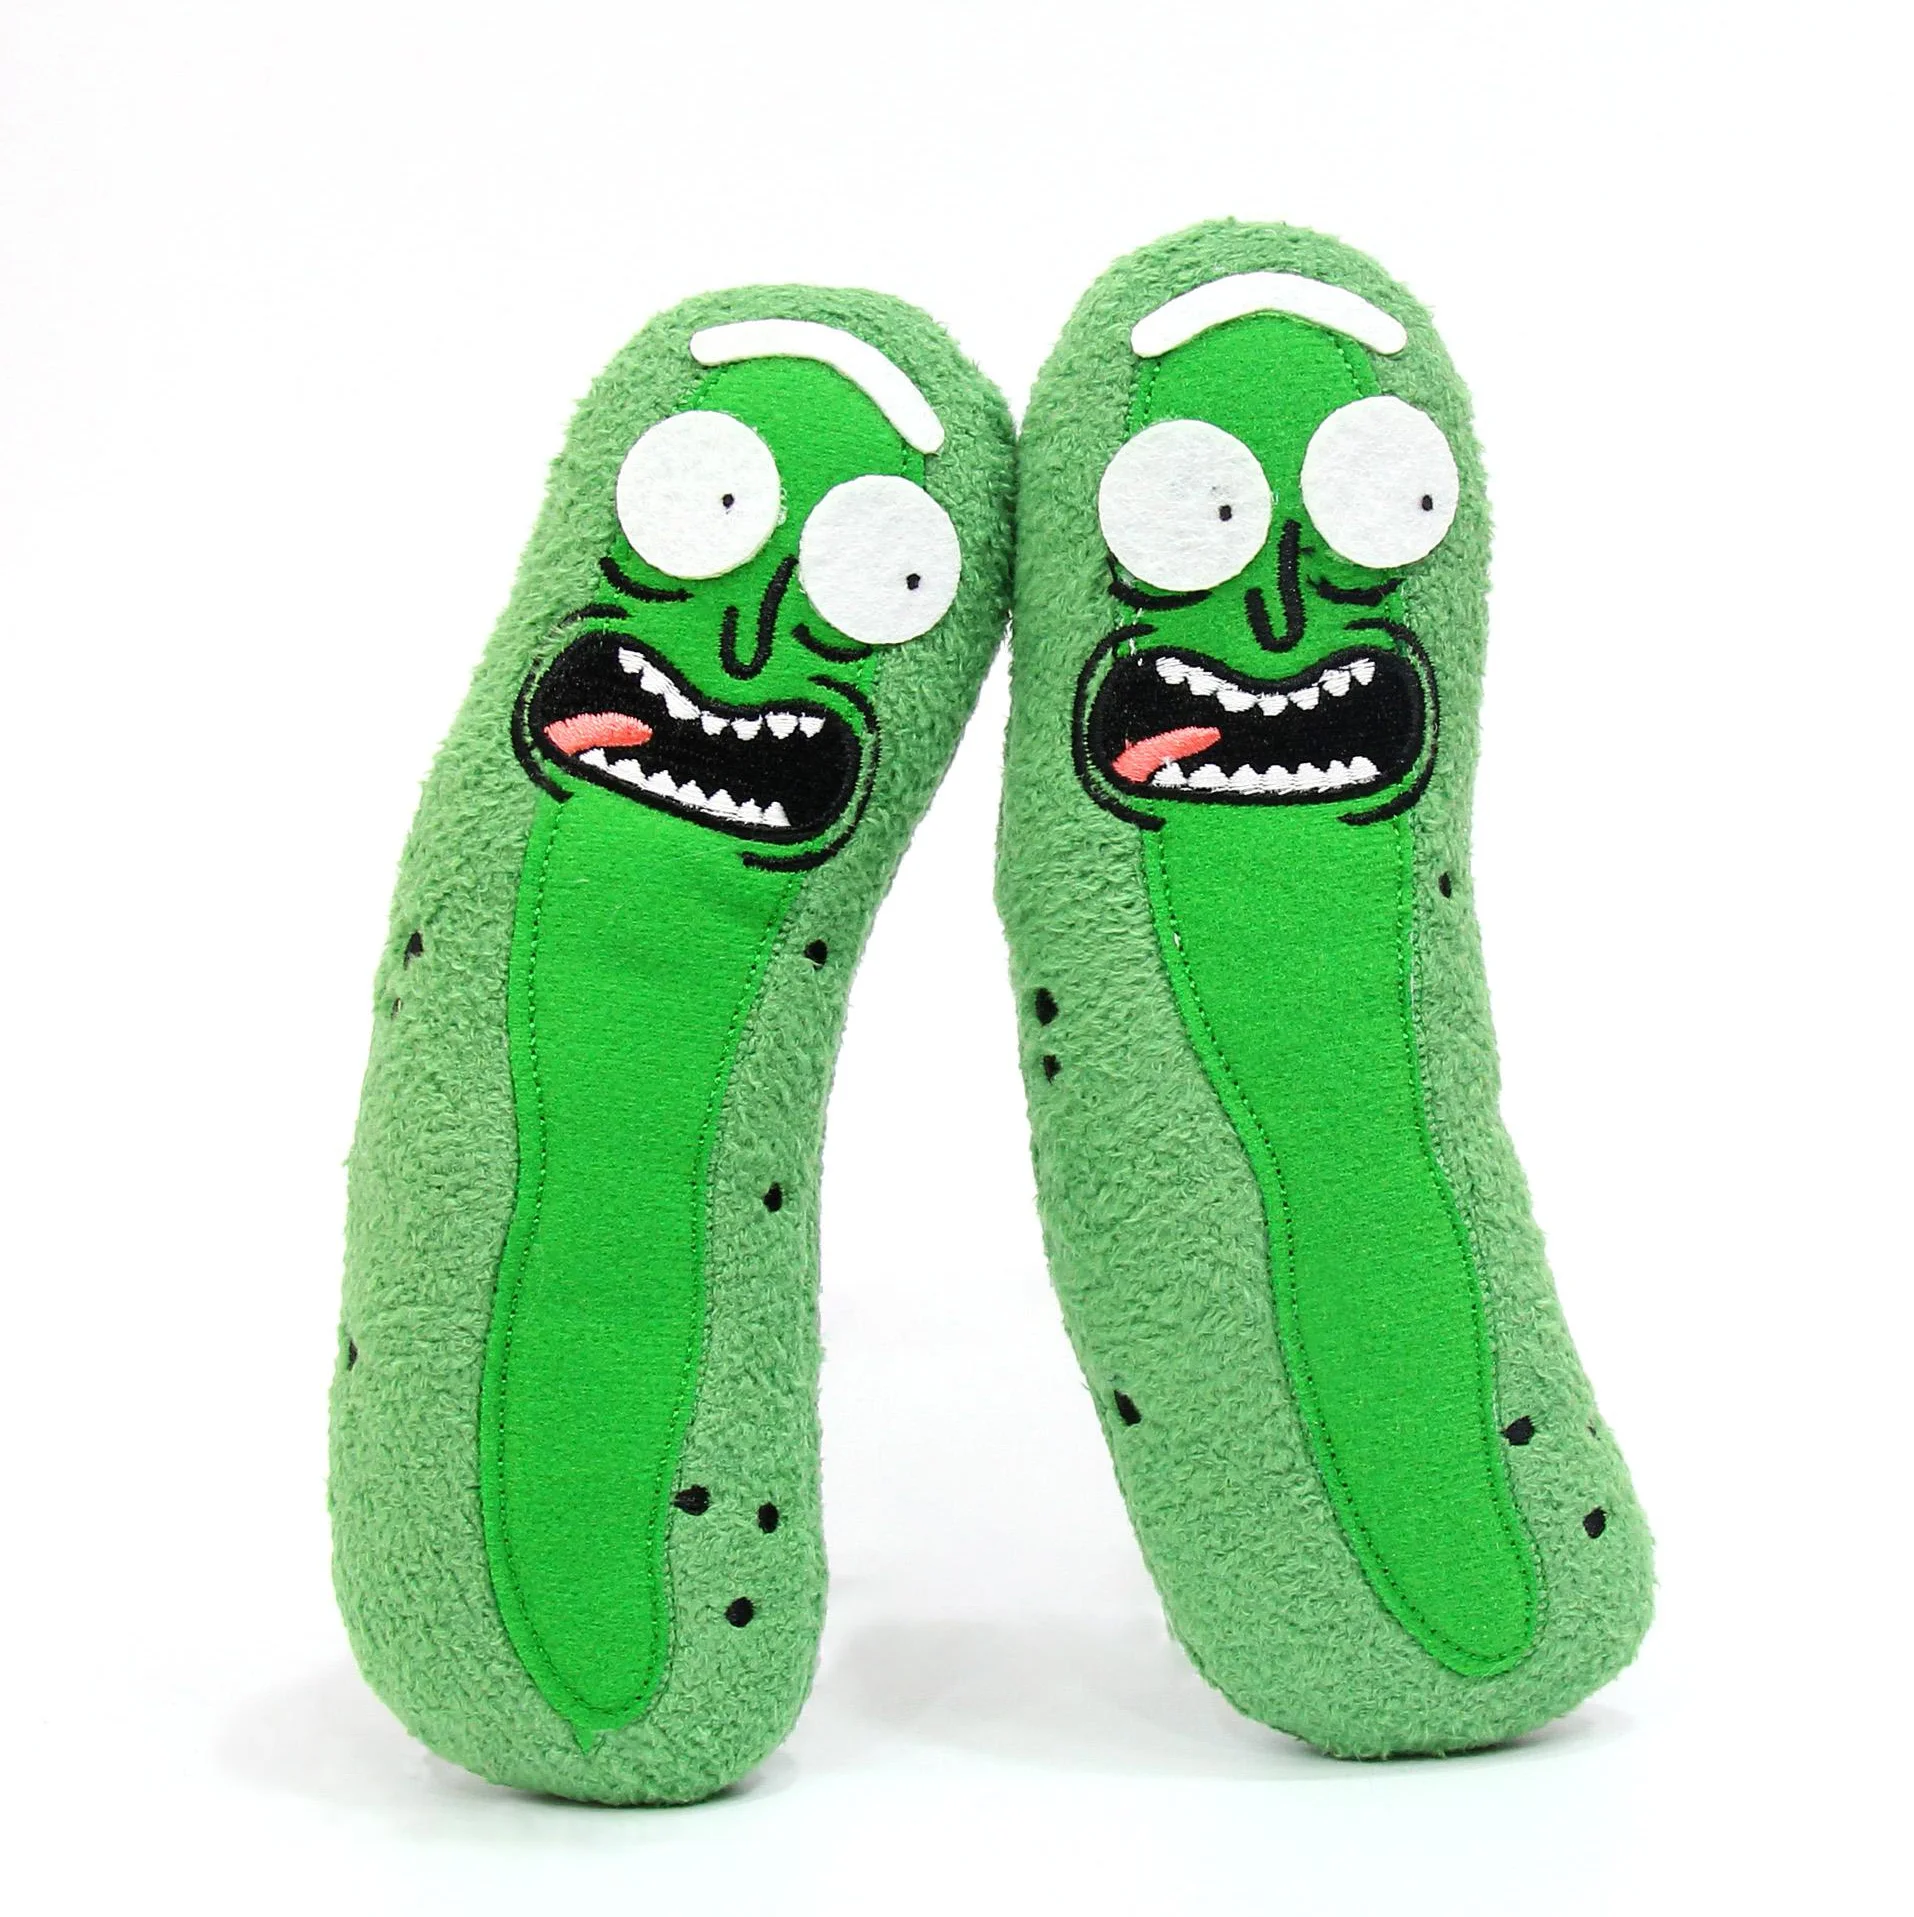 Rick Plush Cucumber Pickle Rick Morty Plush Stuffed Model Toy 